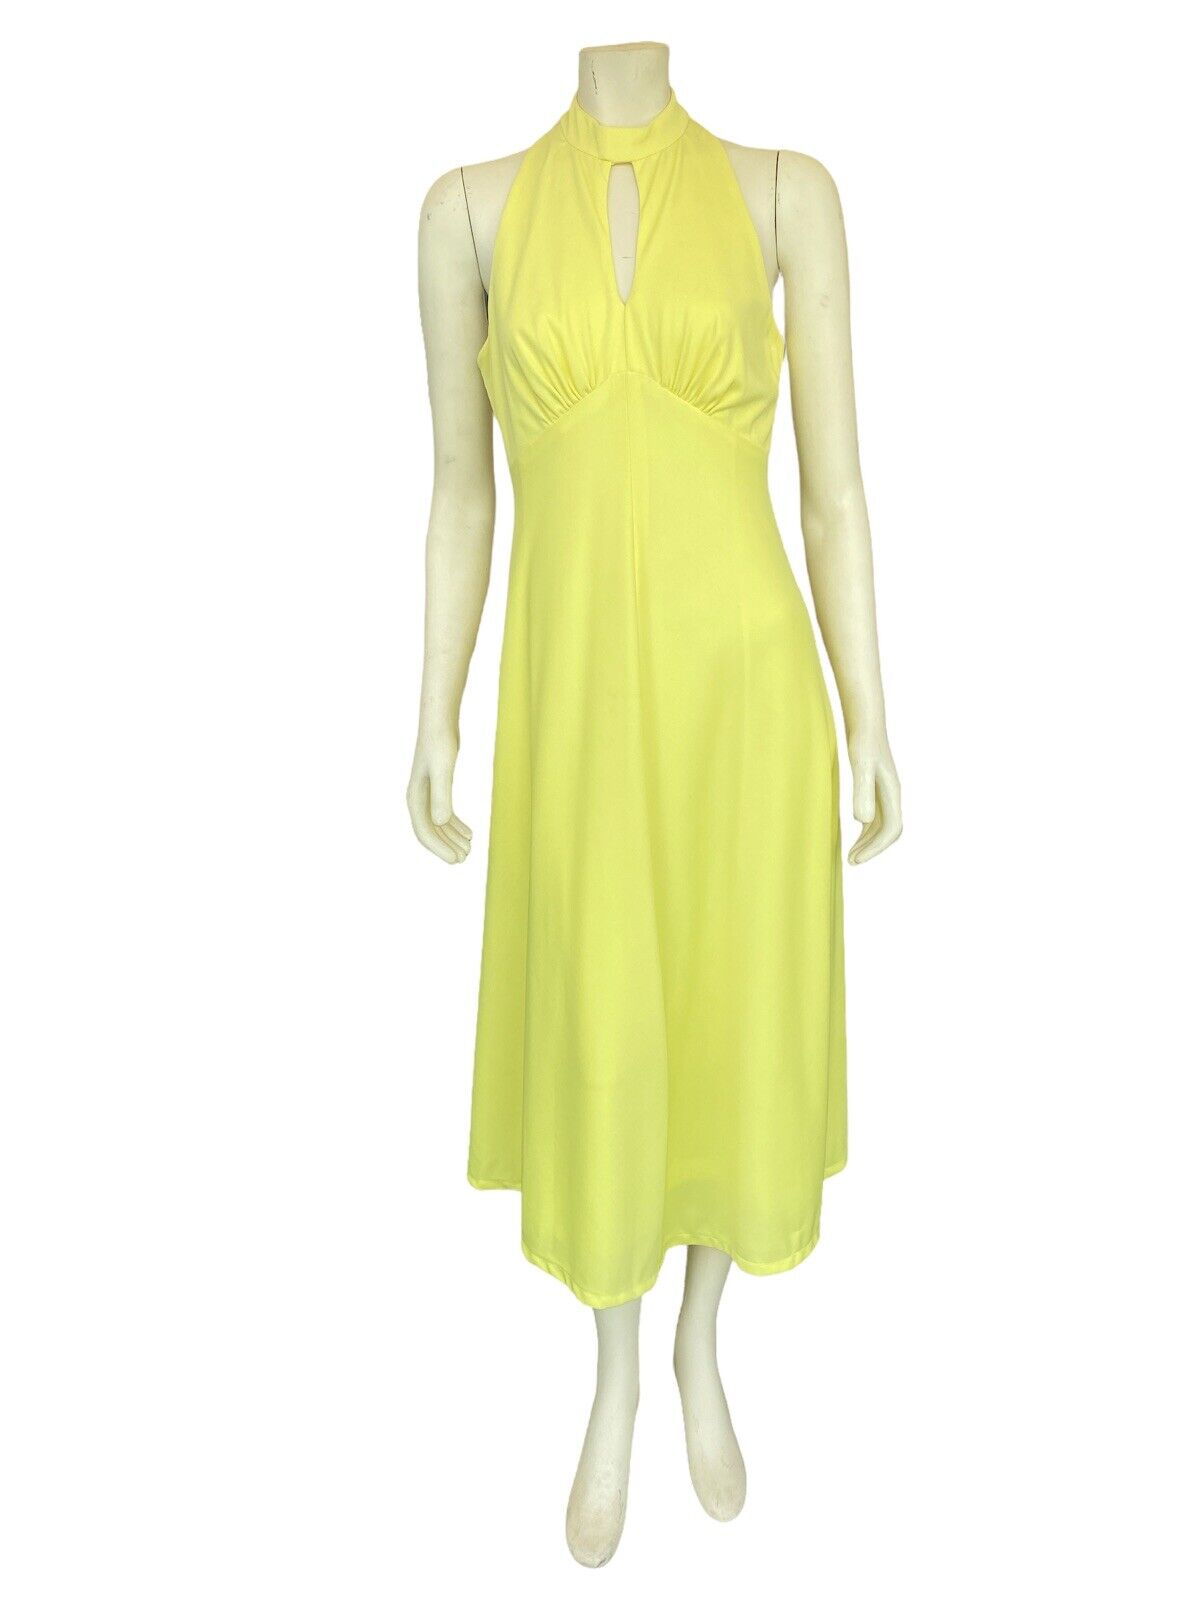 1960s yellow summer dress - image 1